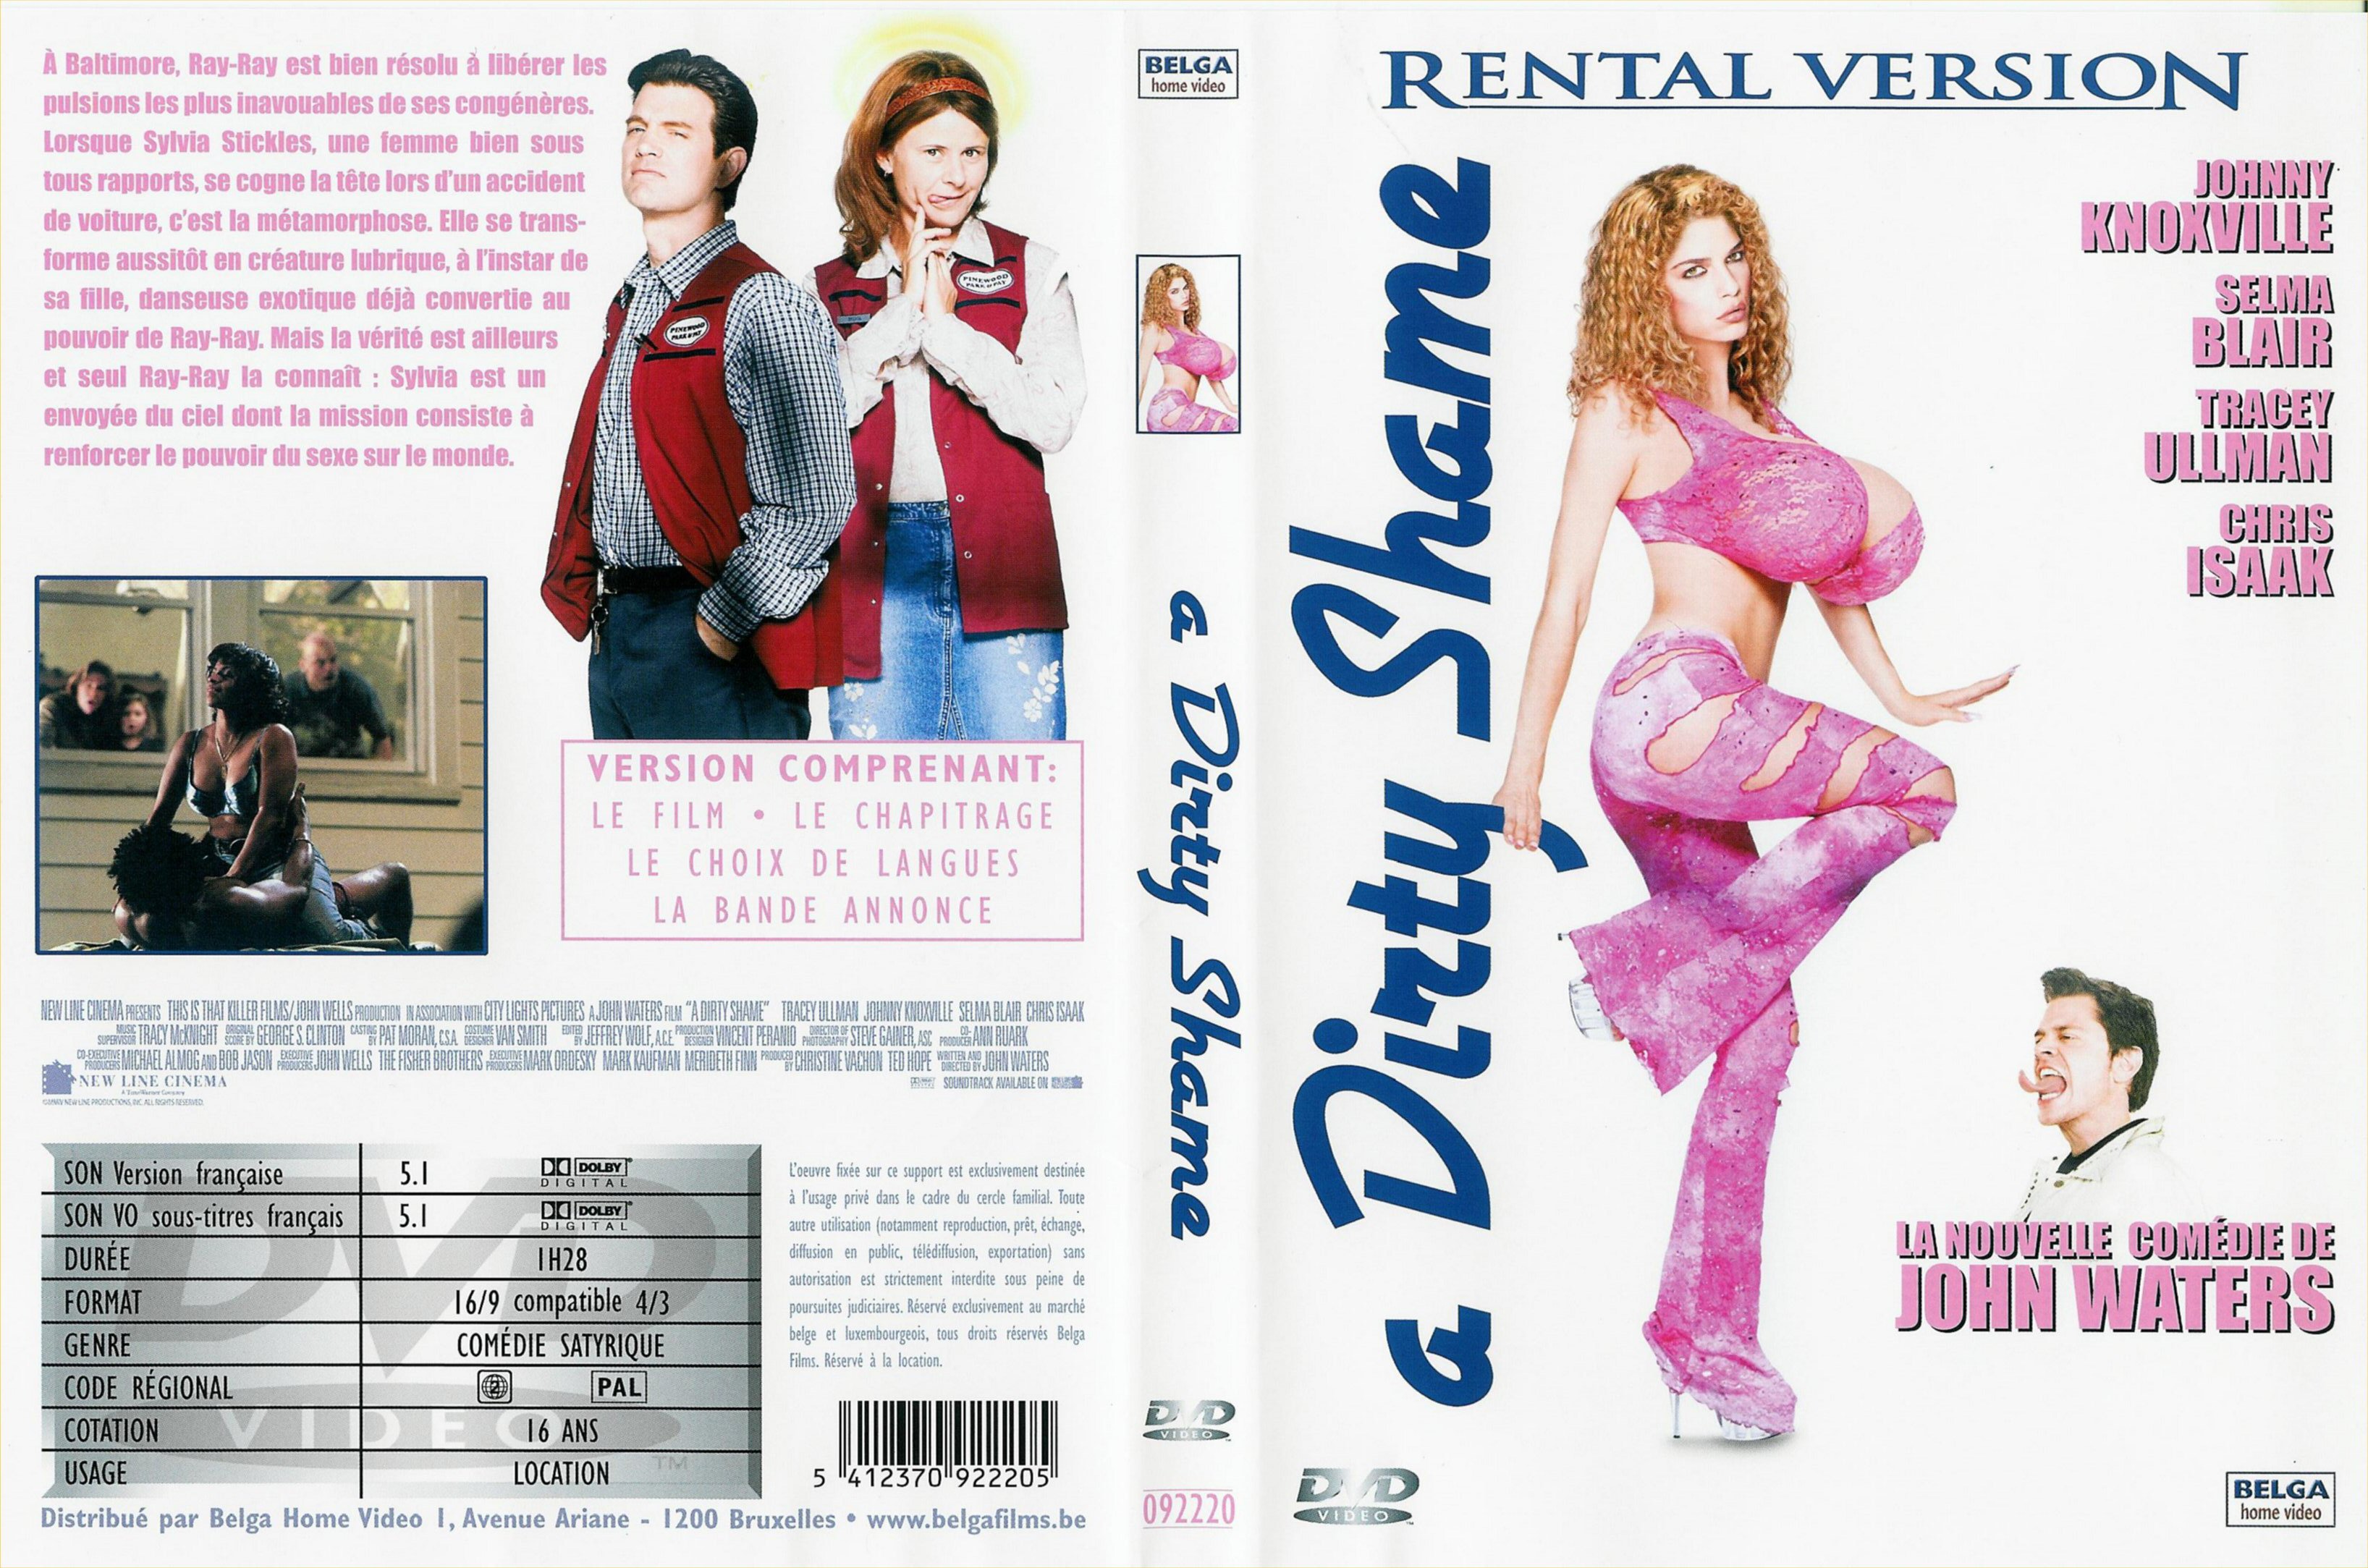 Jaquette DVD A dirty shame v2